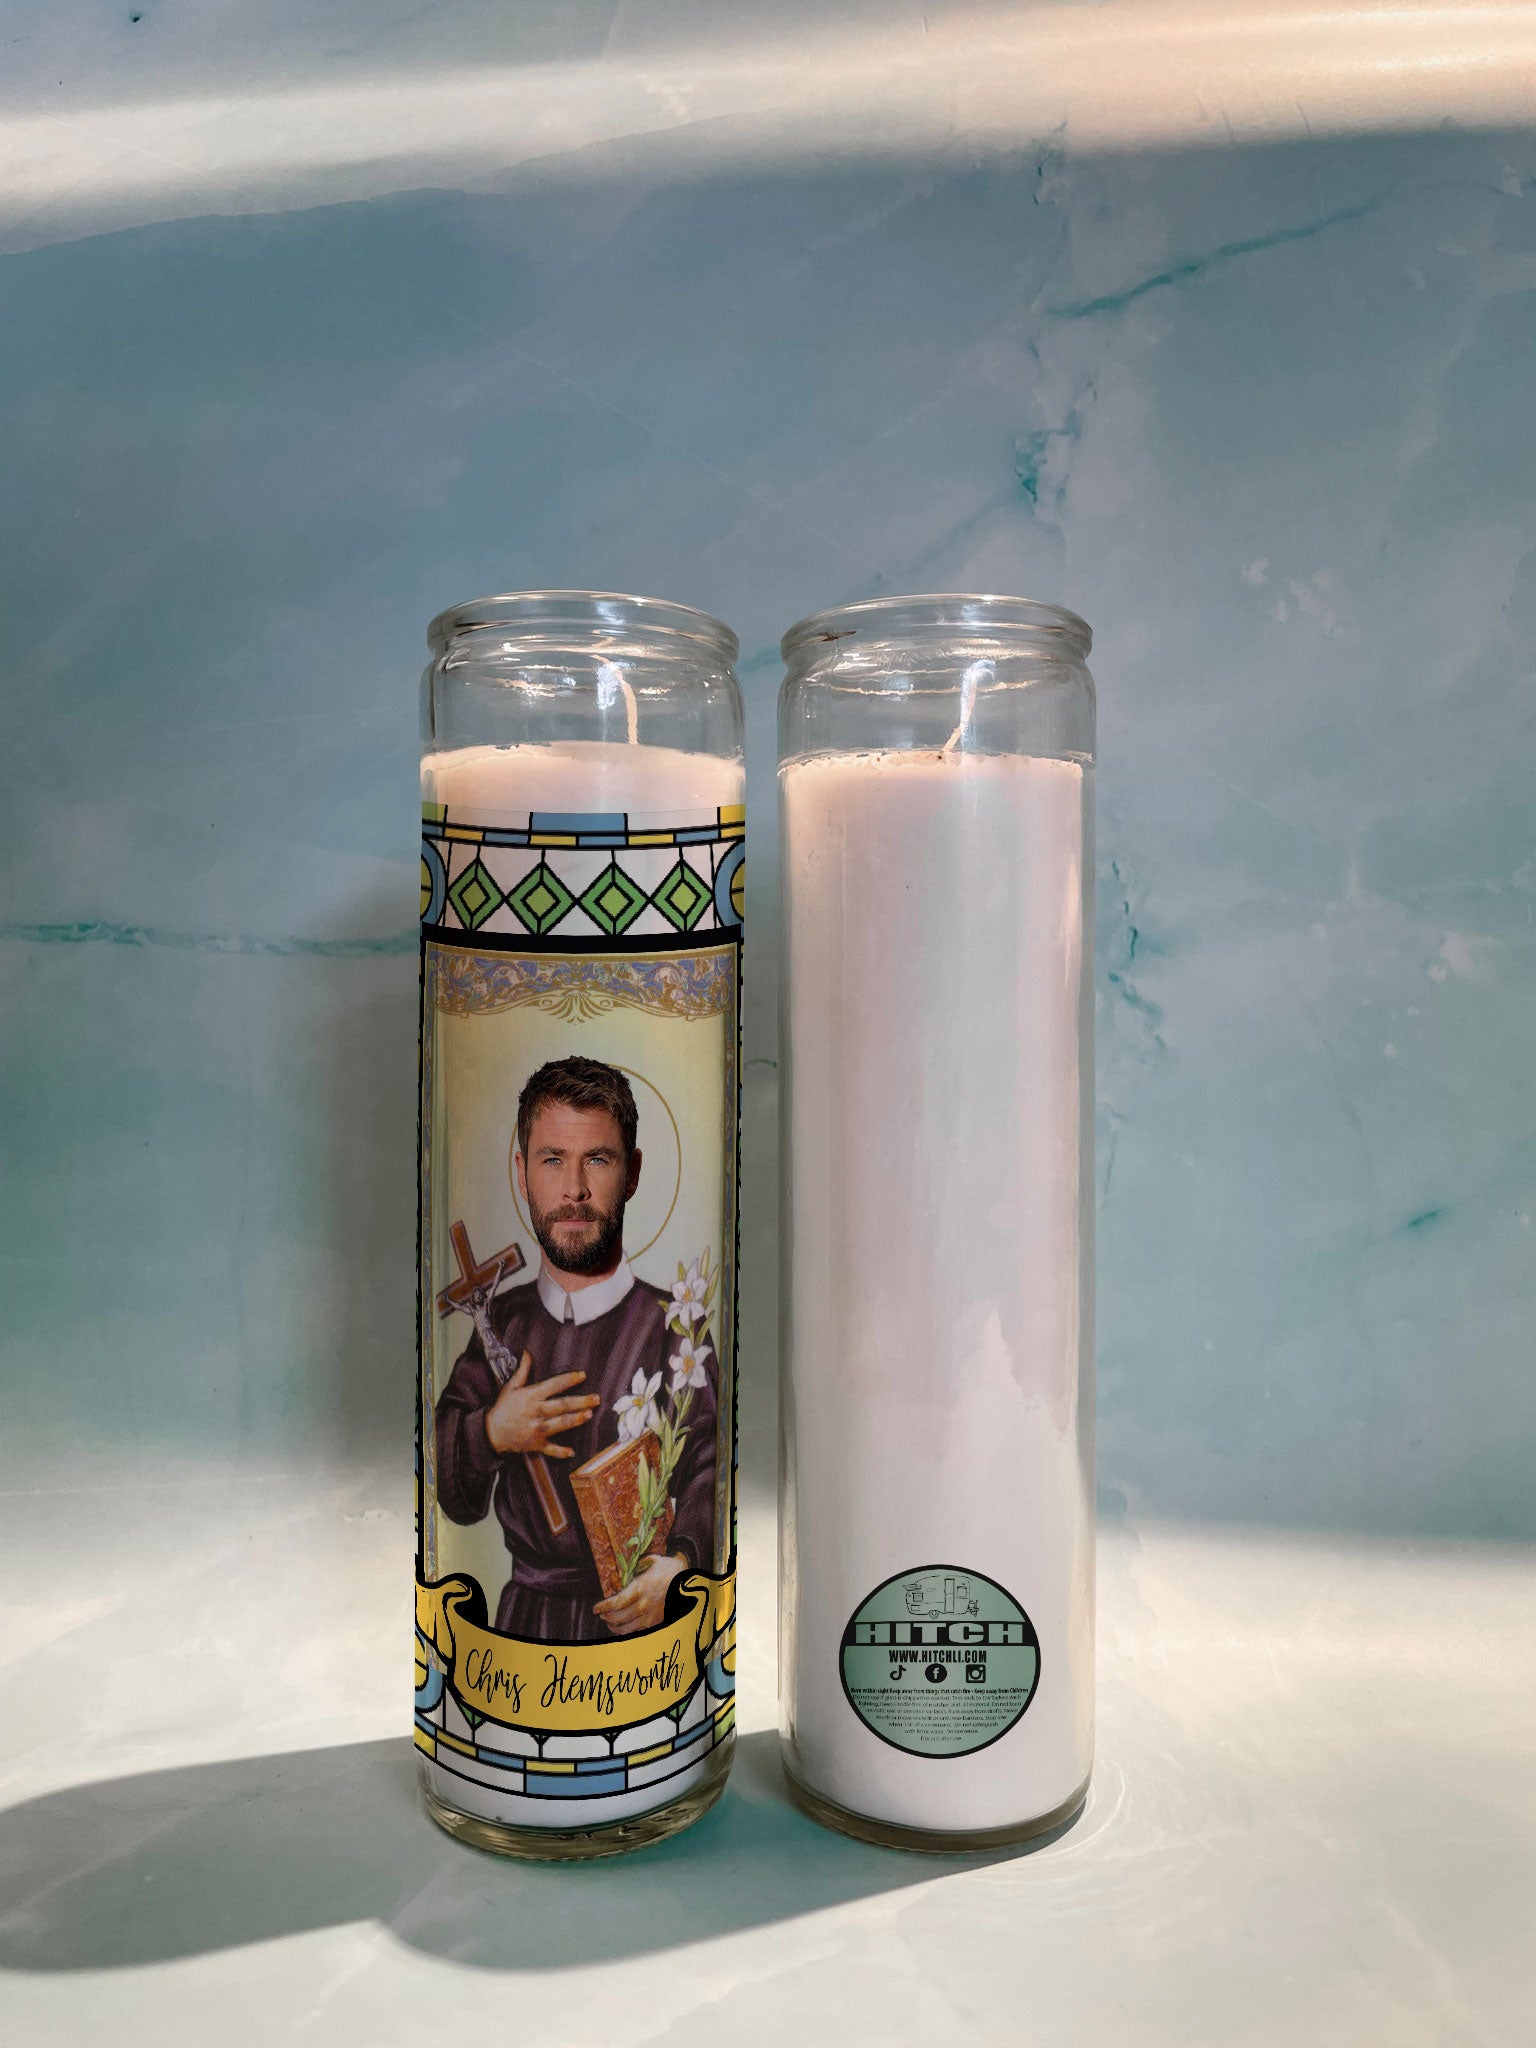 Chris Hemsworth Original Prayer Candle